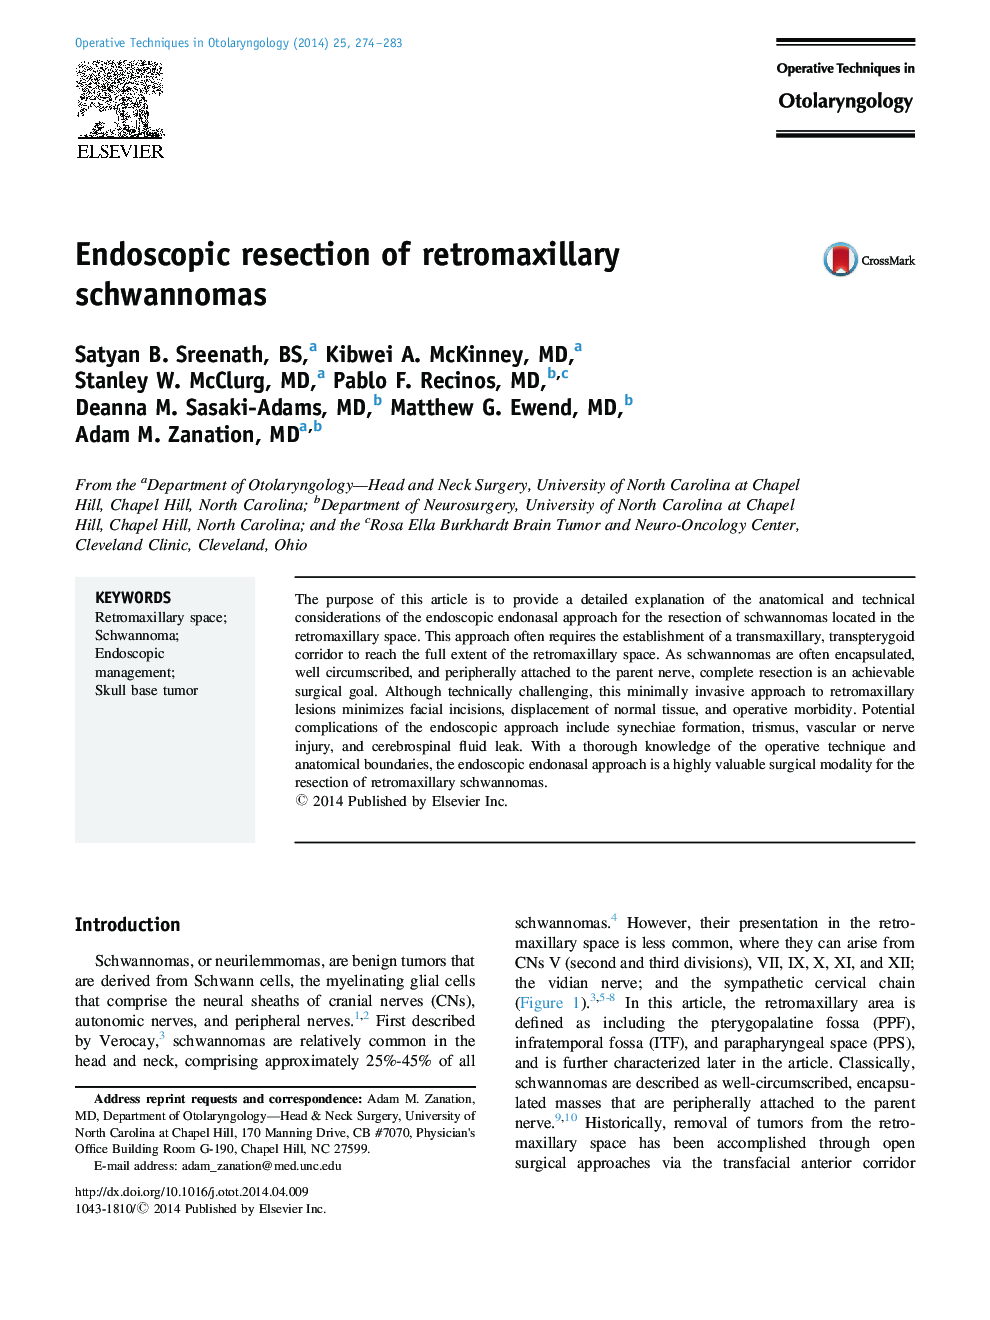 Endoscopic resection of retromaxillary schwannomas